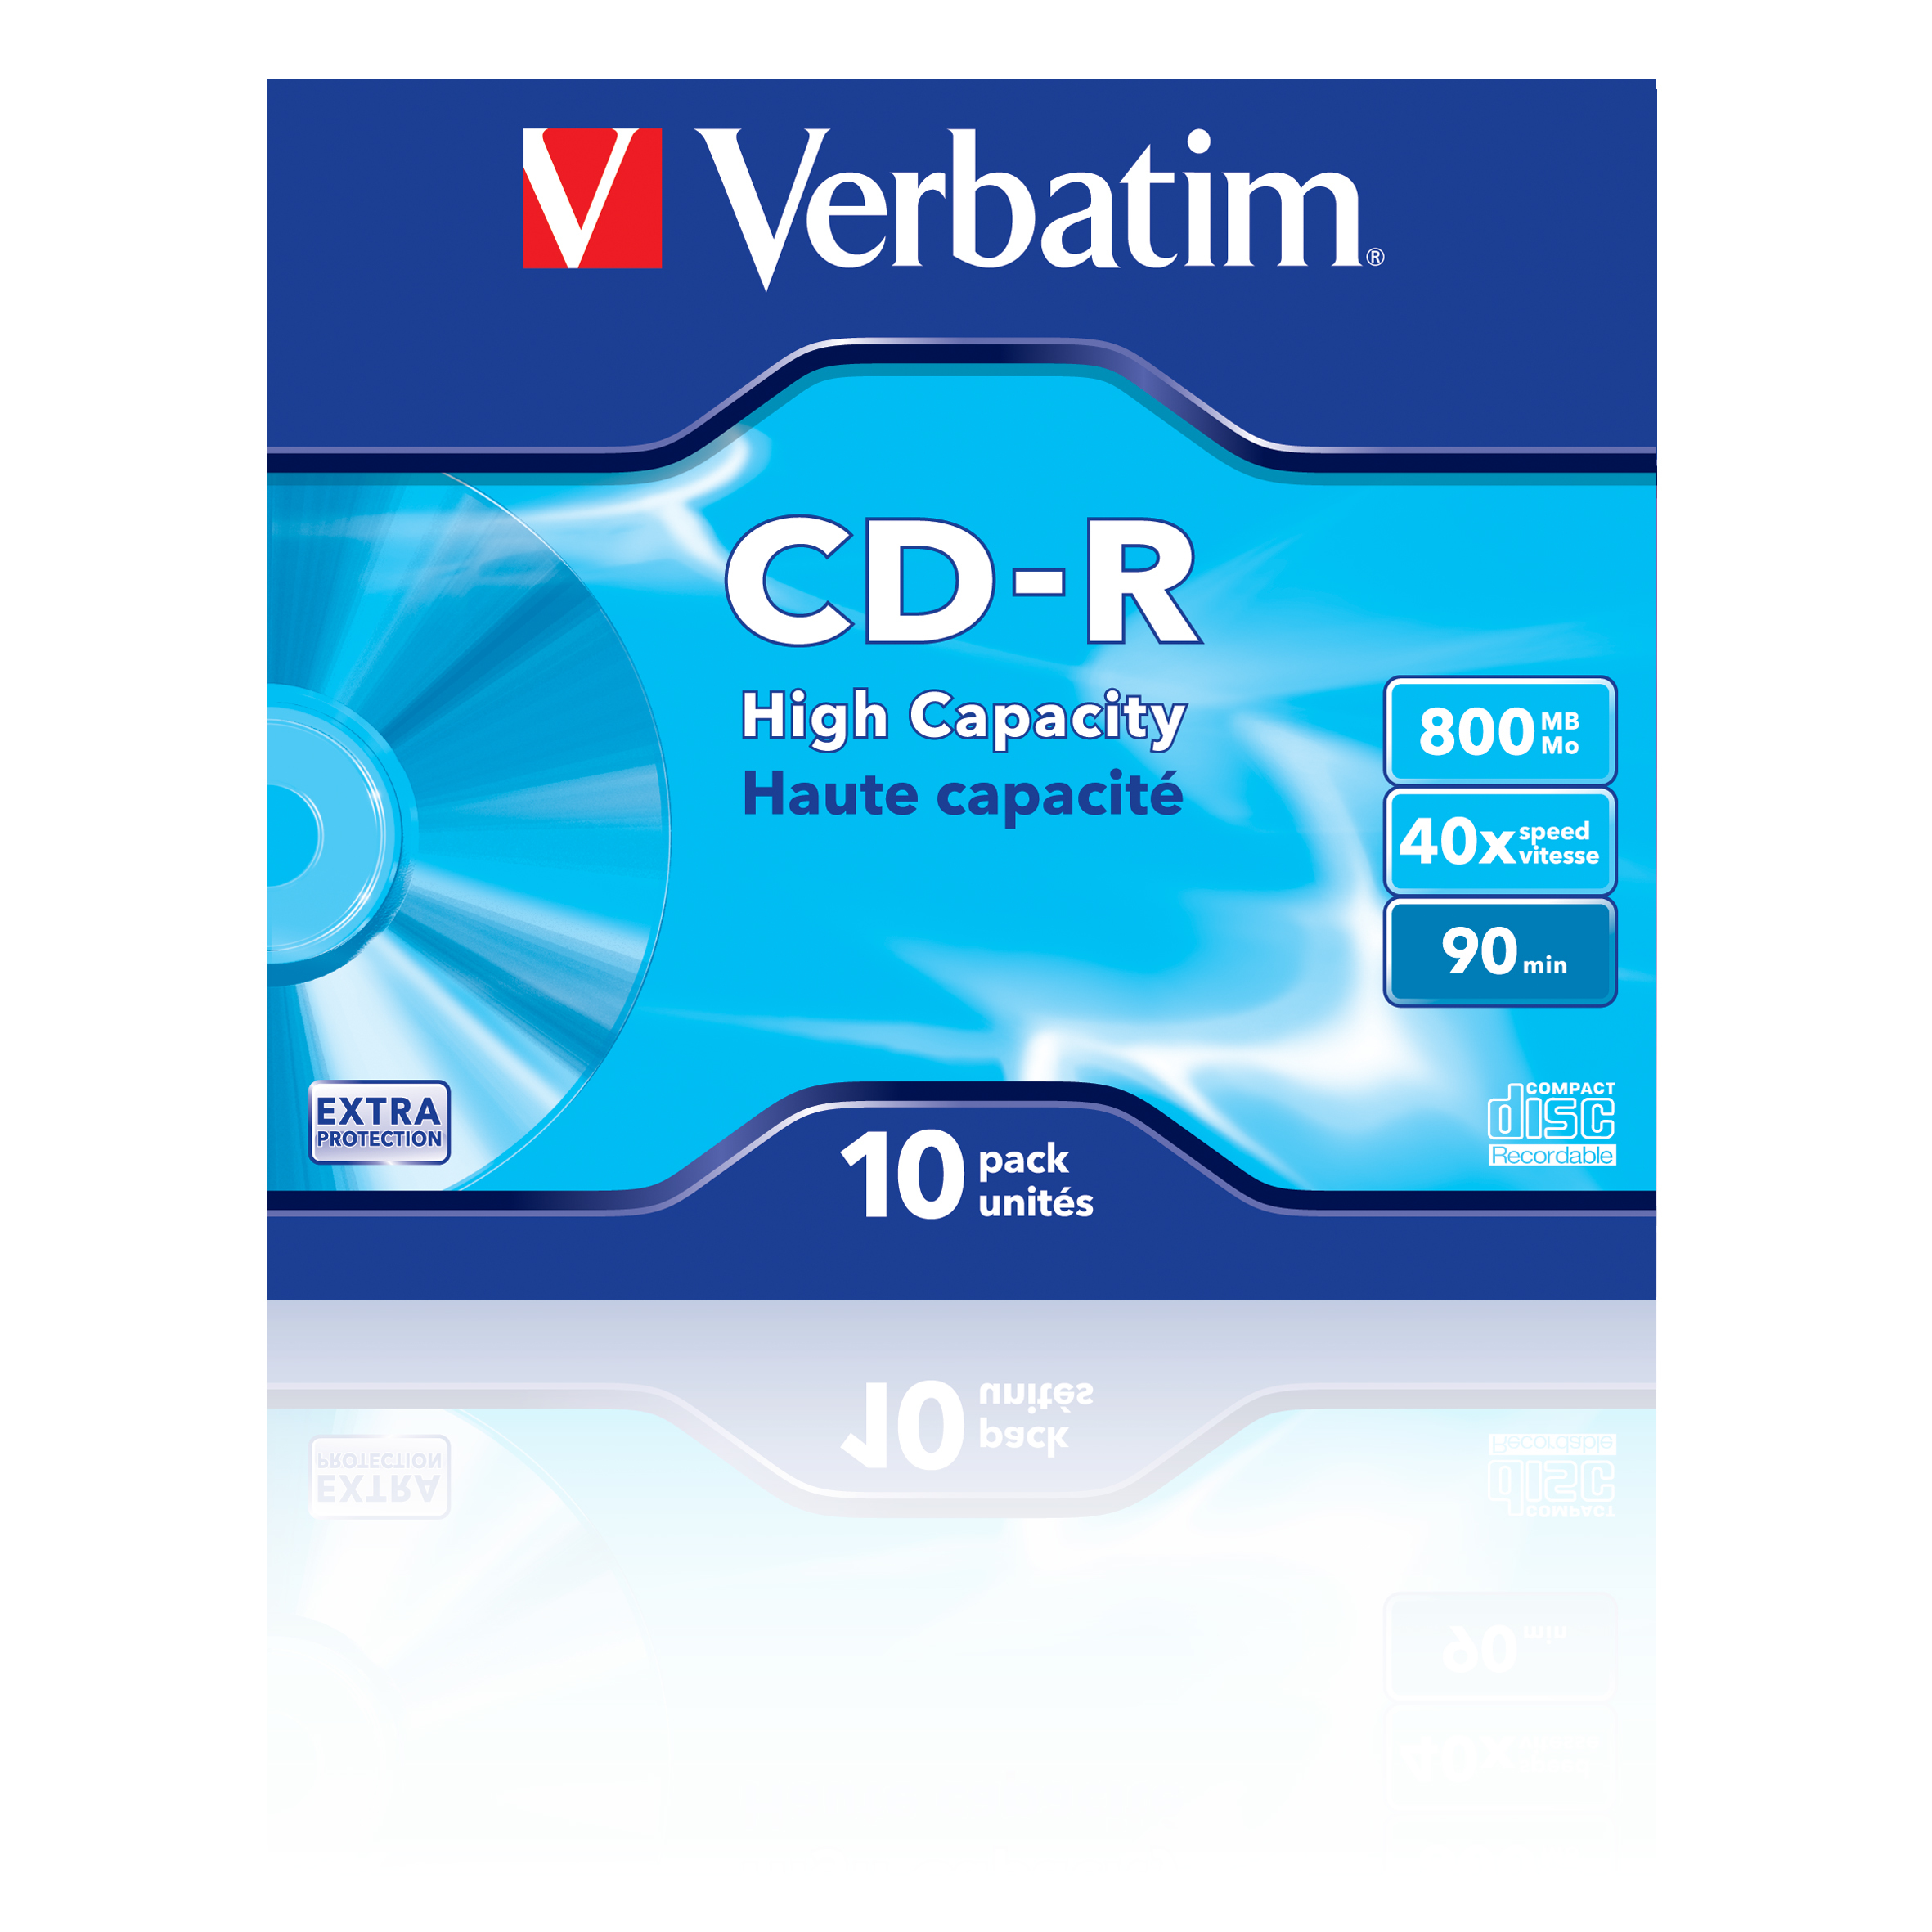 Verbatim CD-R High Capacity 800 MB 10 styck